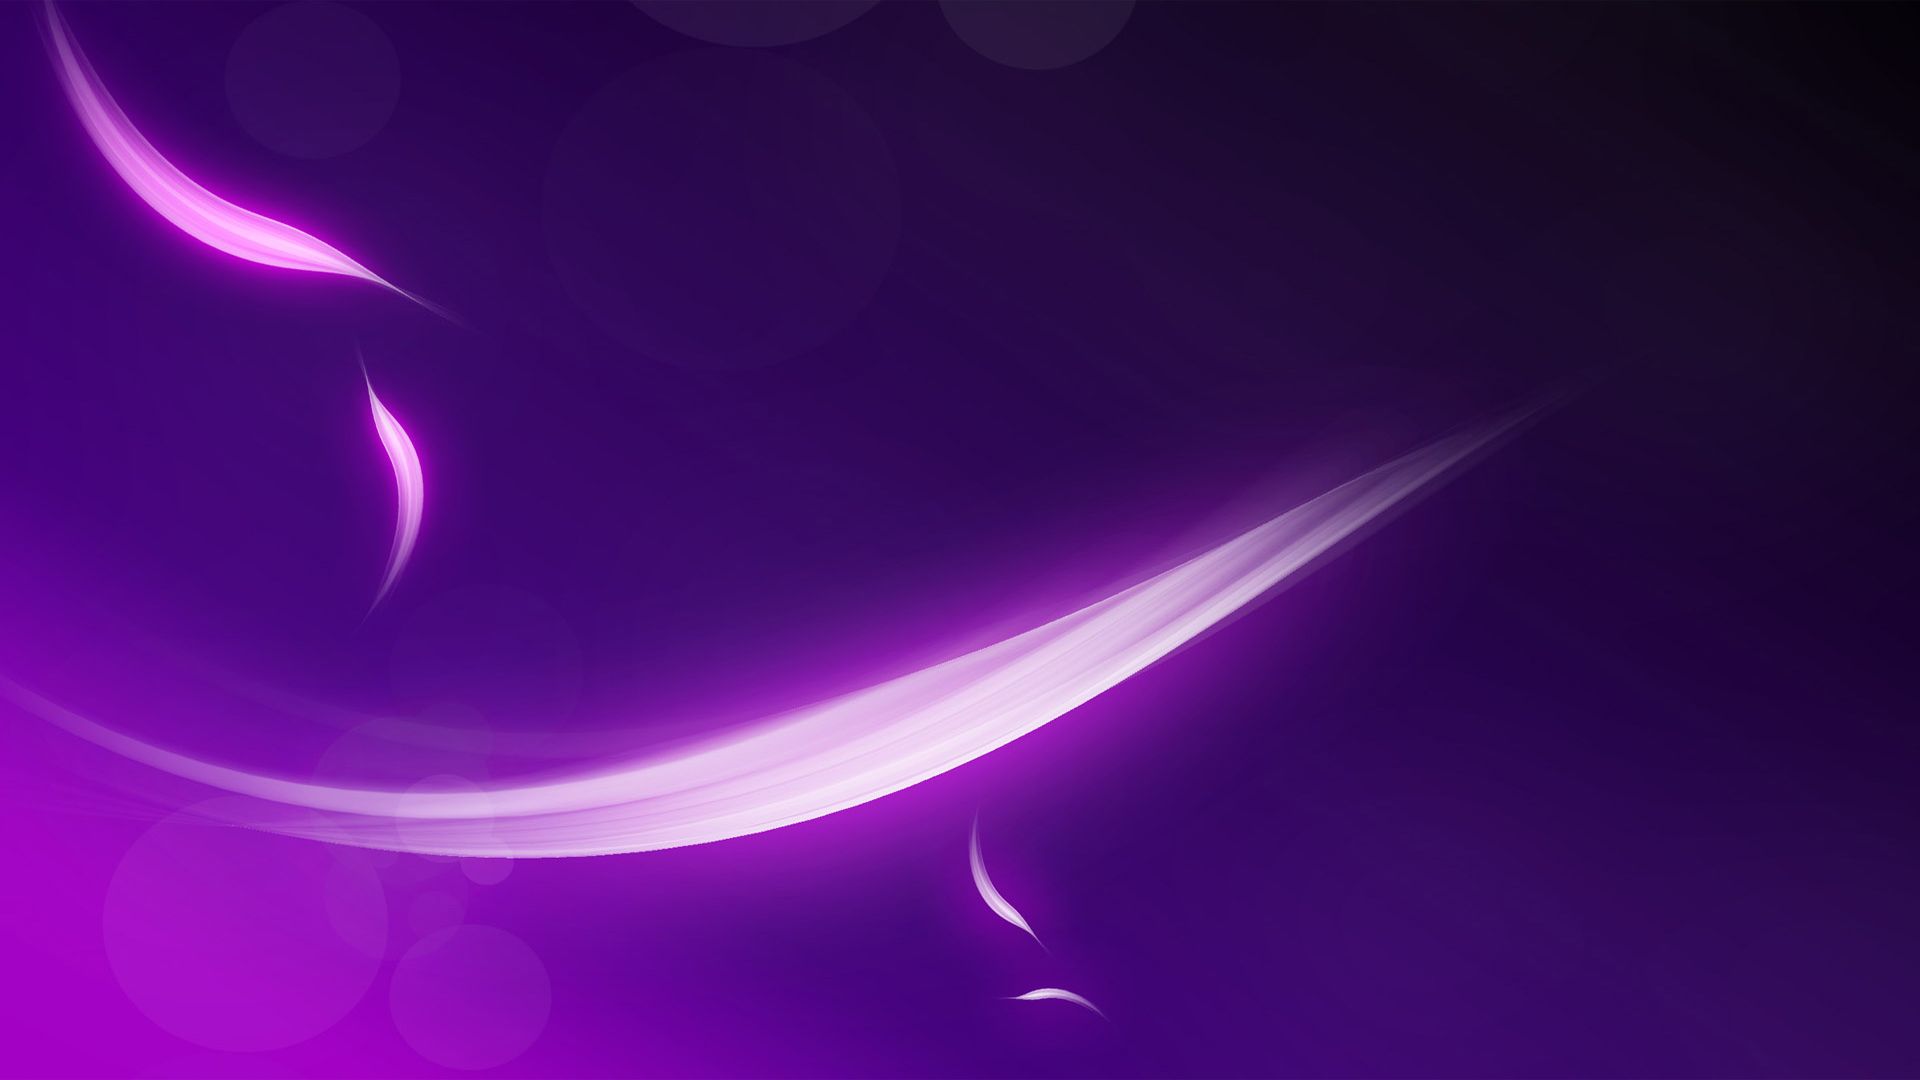 Purple Backgrounds Wallpapers HD 1080p | Wallpicshd